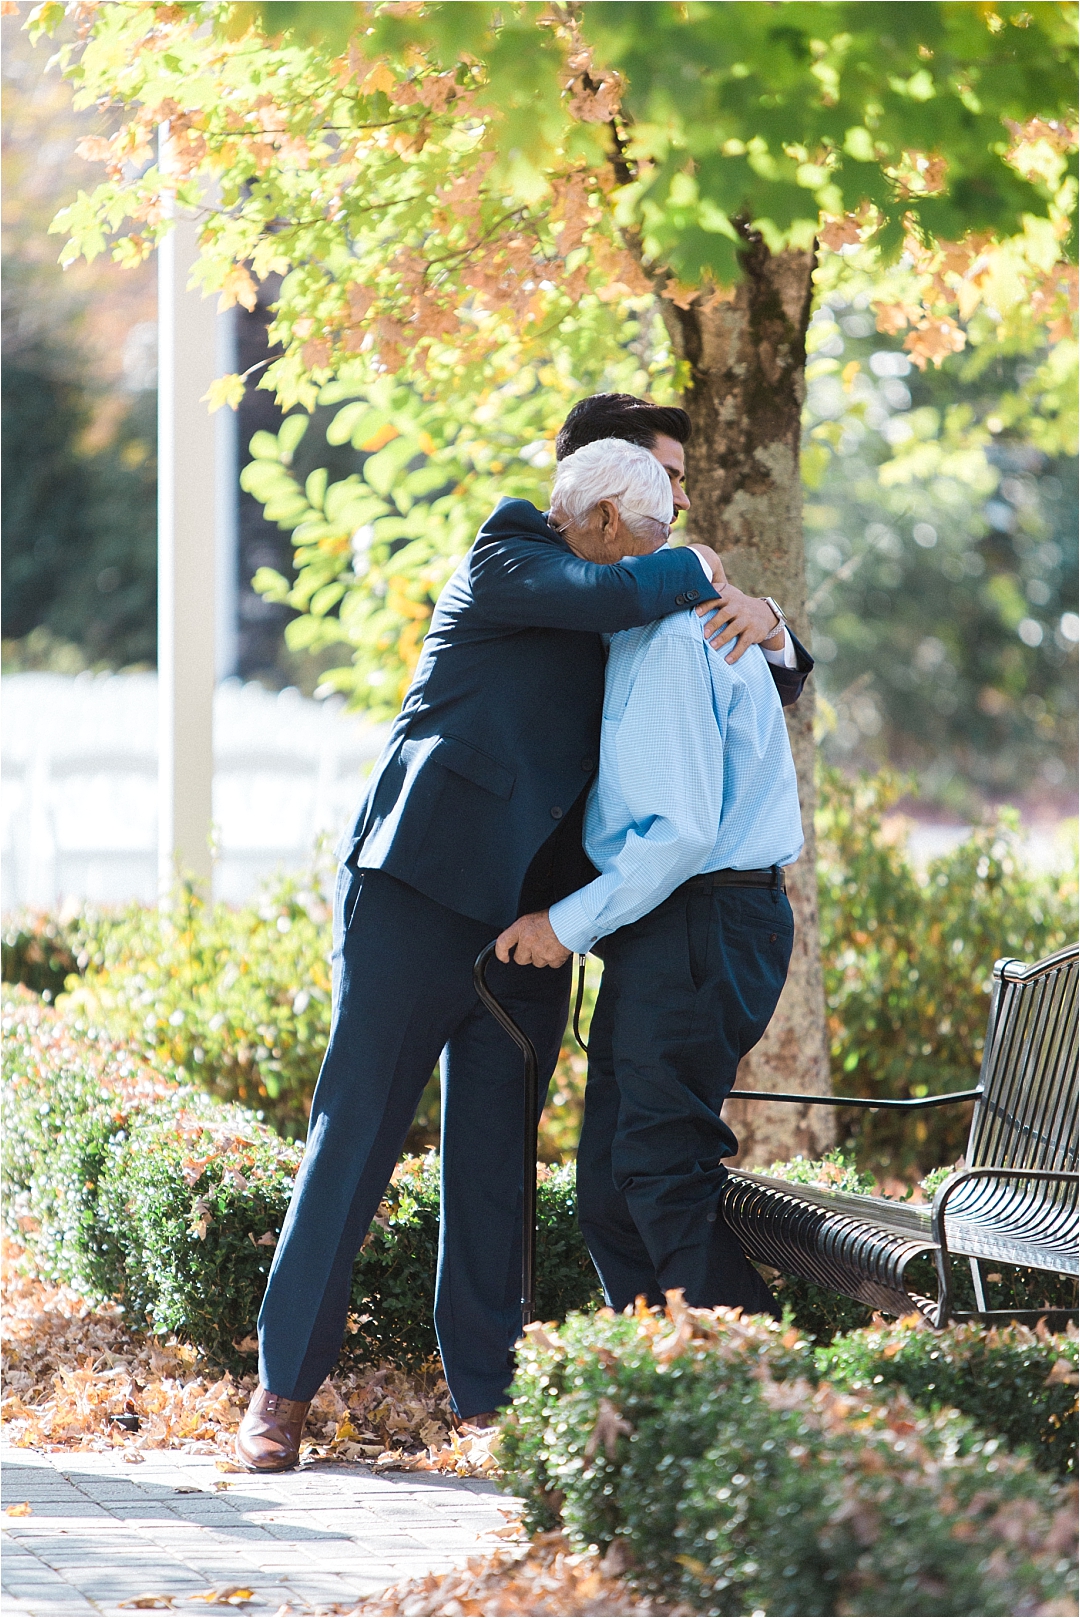 groom hugging grandfather_Photos by Leigh Wolfe, Atlanta's Top Wedding Photographer